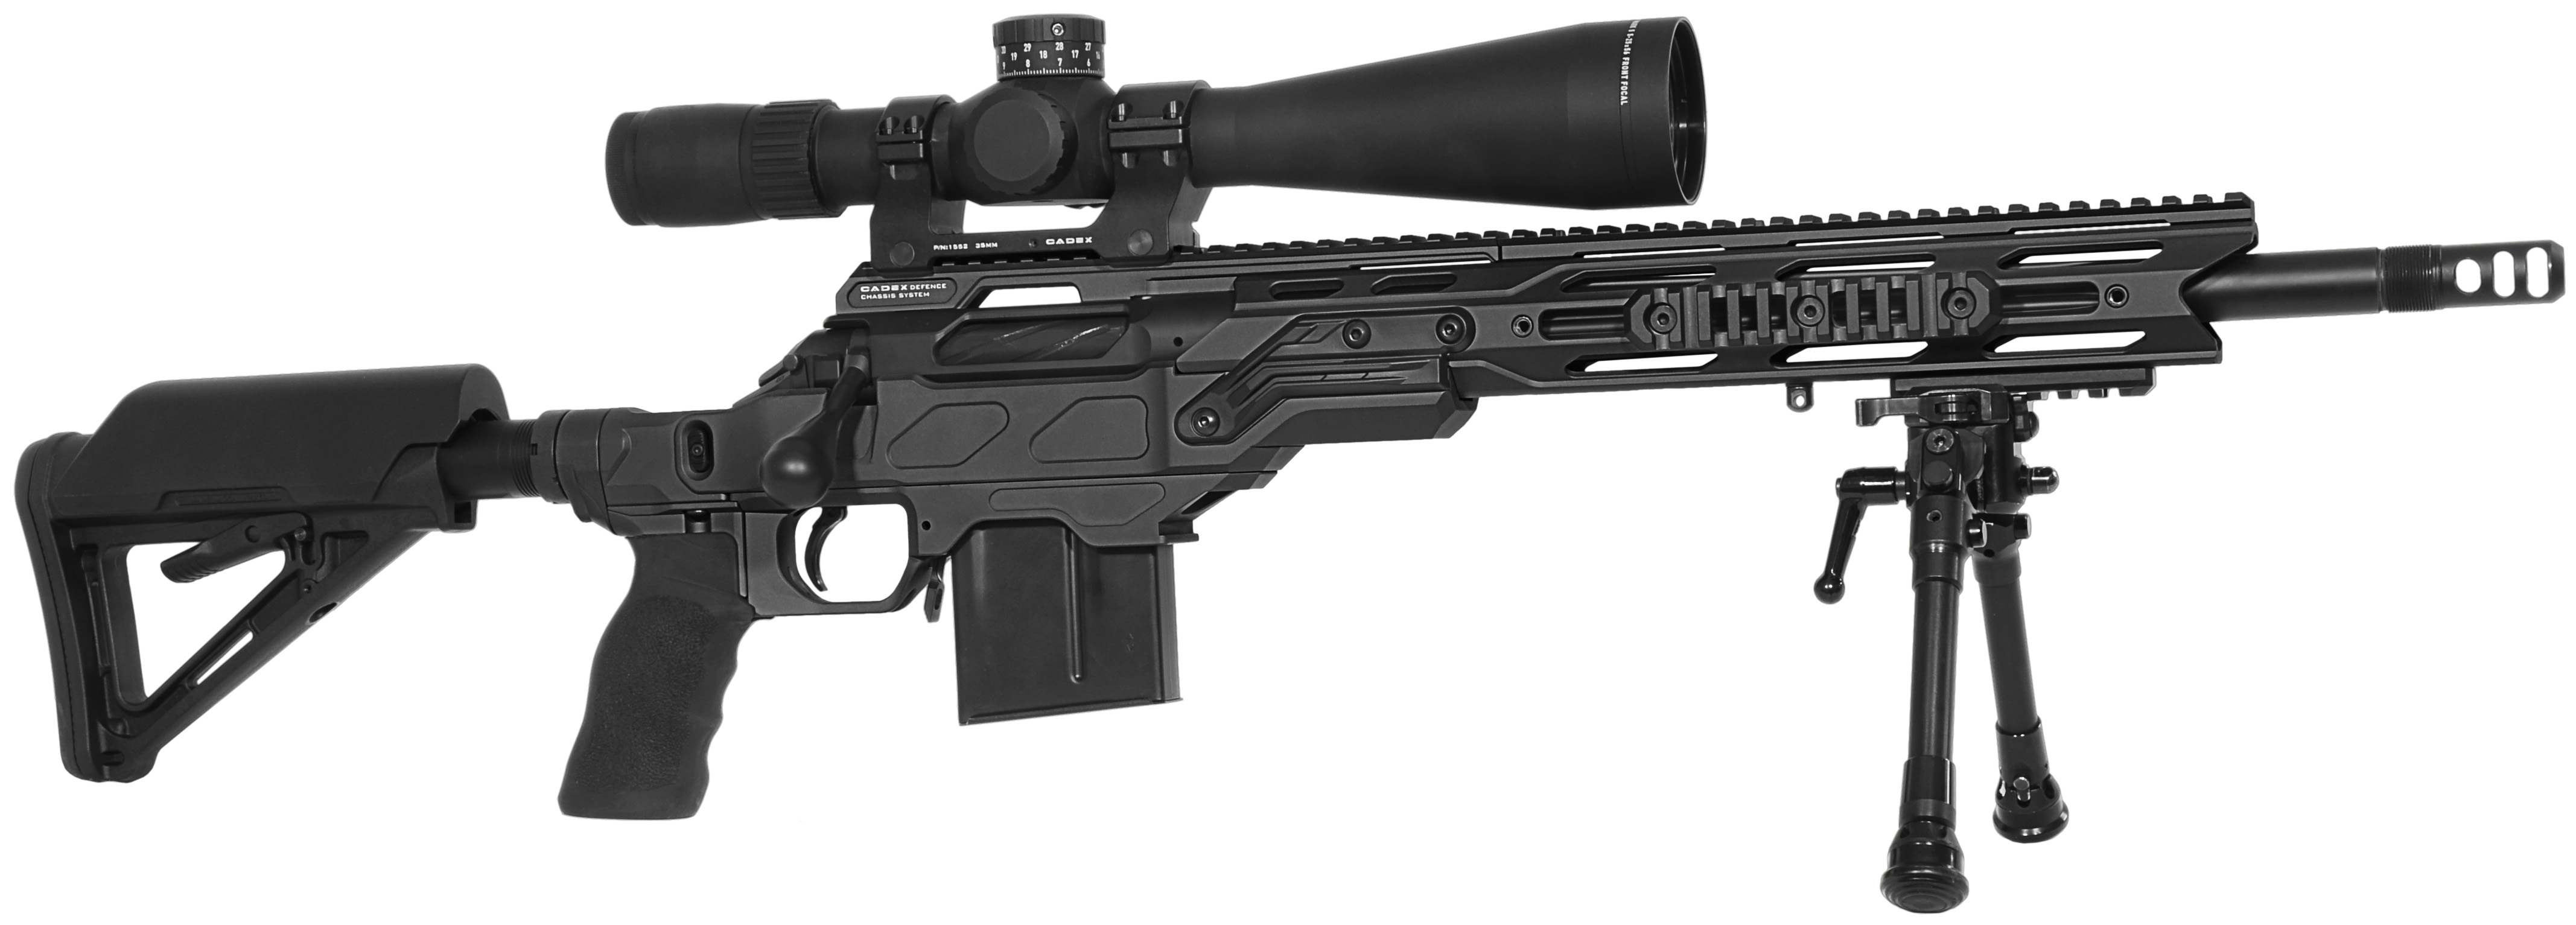 Cadex Defense CDX Precision Sniper Rifles